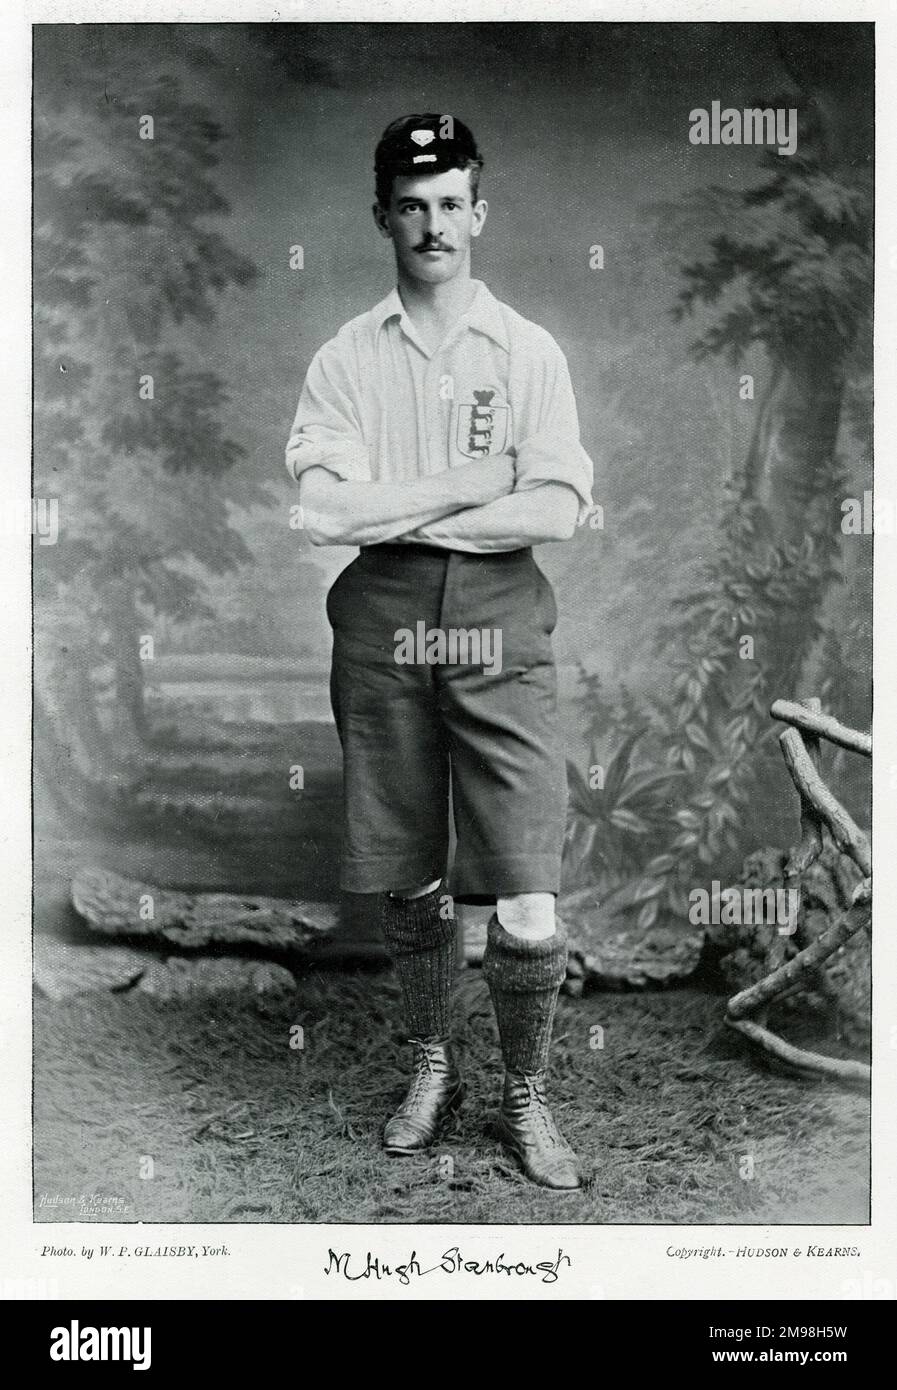 M Hugh Stanbrough, England Amateur Football International player. Stock Photo